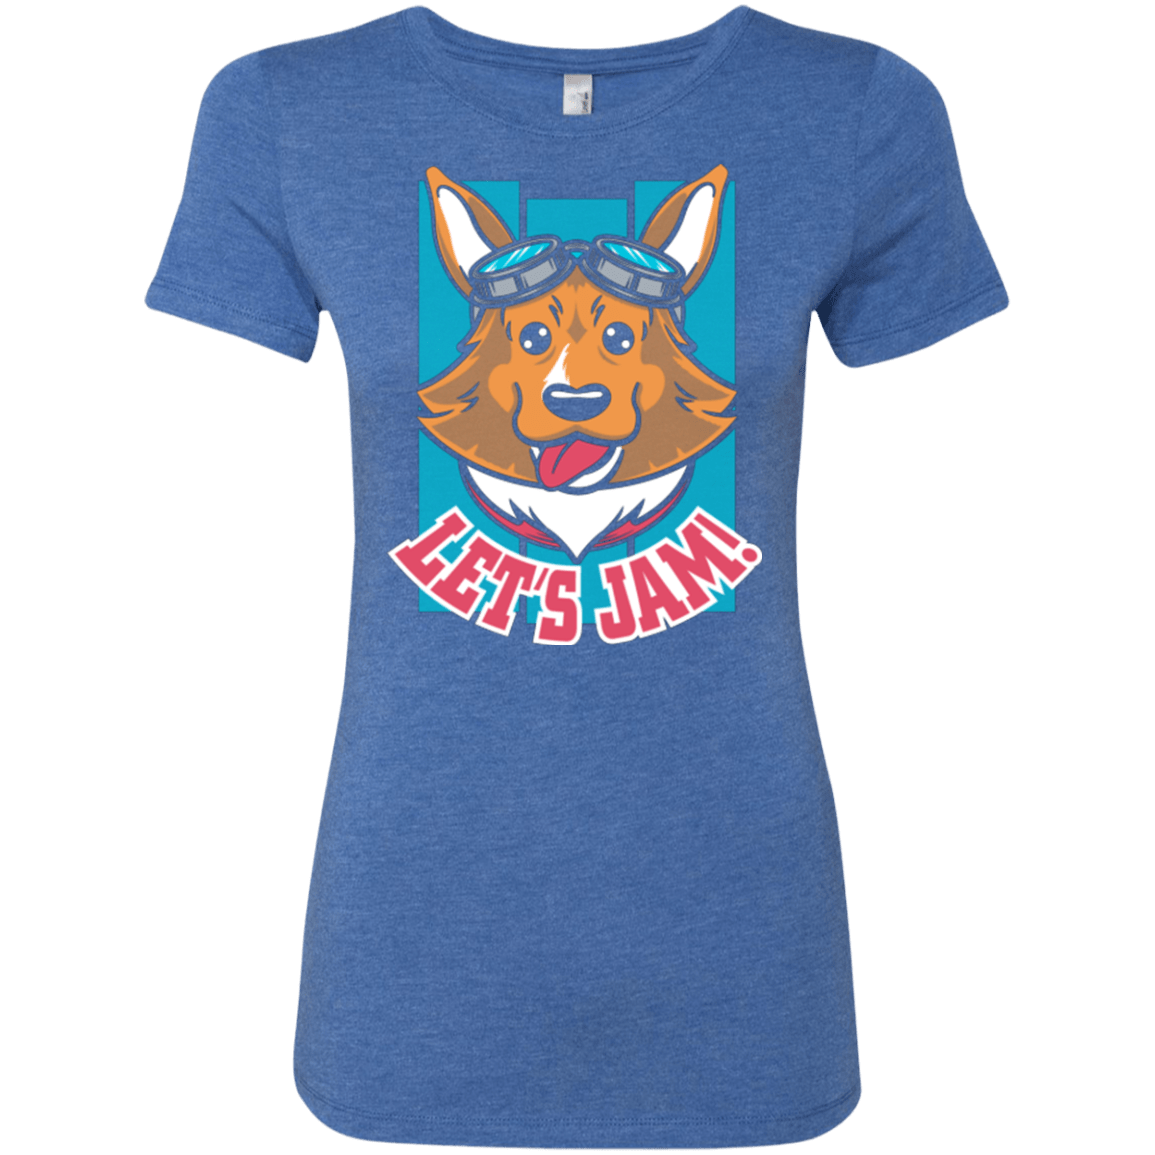 Lets Jam (2) Women's Triblend T-Shirt